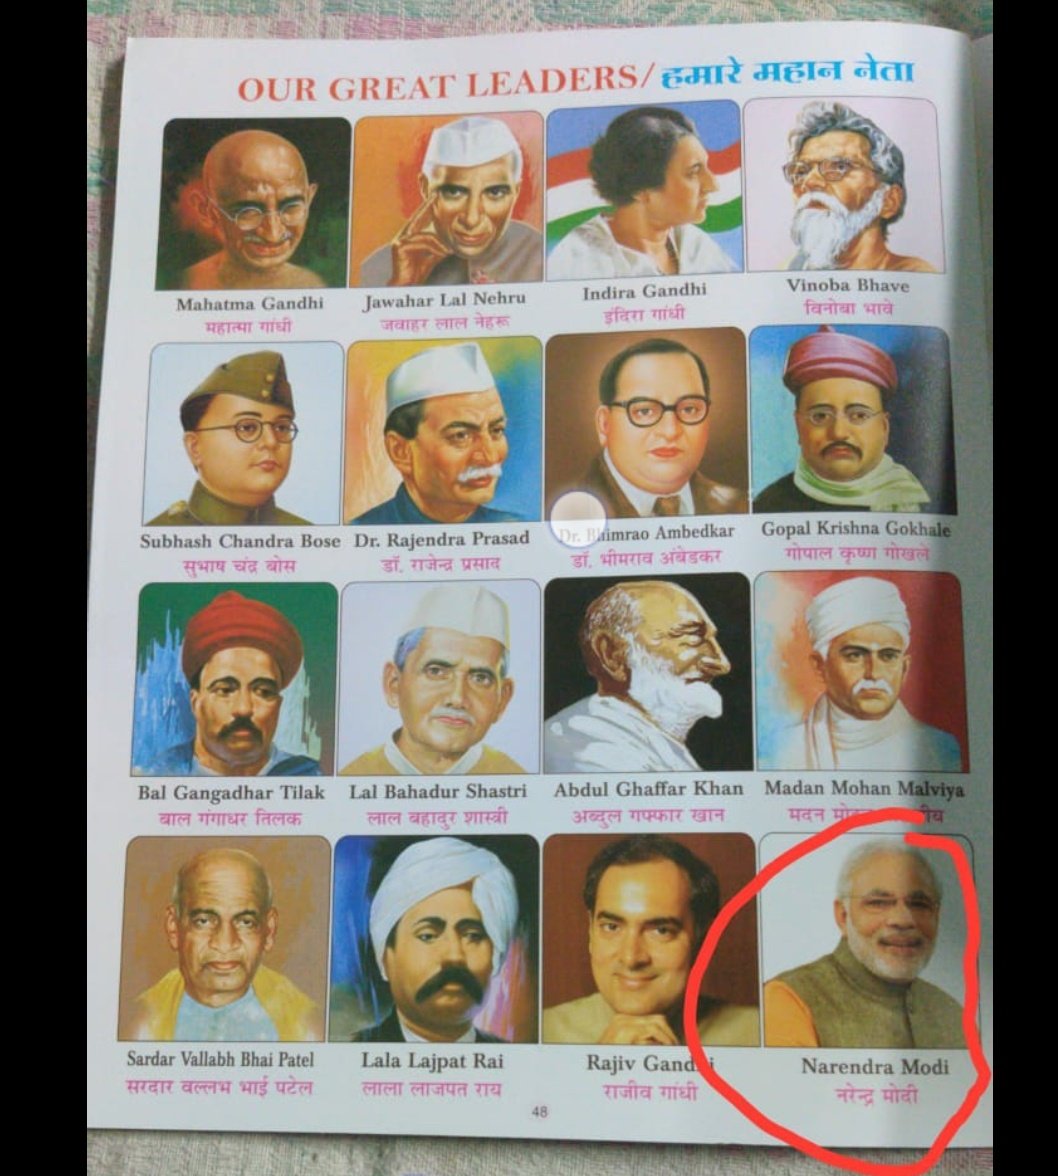 Shaikh Tabinda on X: Why narendra modi name is on the list of our great  leaders? Why not APJ abdul kalam, Rabindranath tagore, Bhagat Singh,  Ashfaqulla khan, Ram prasad bismil and maulana